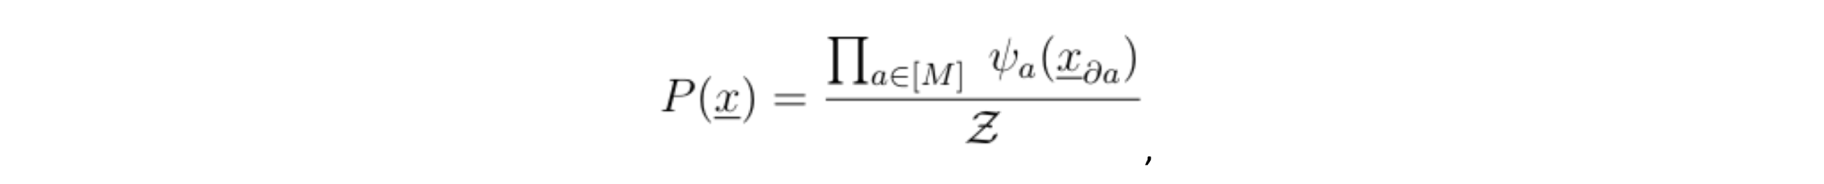 Equation 5